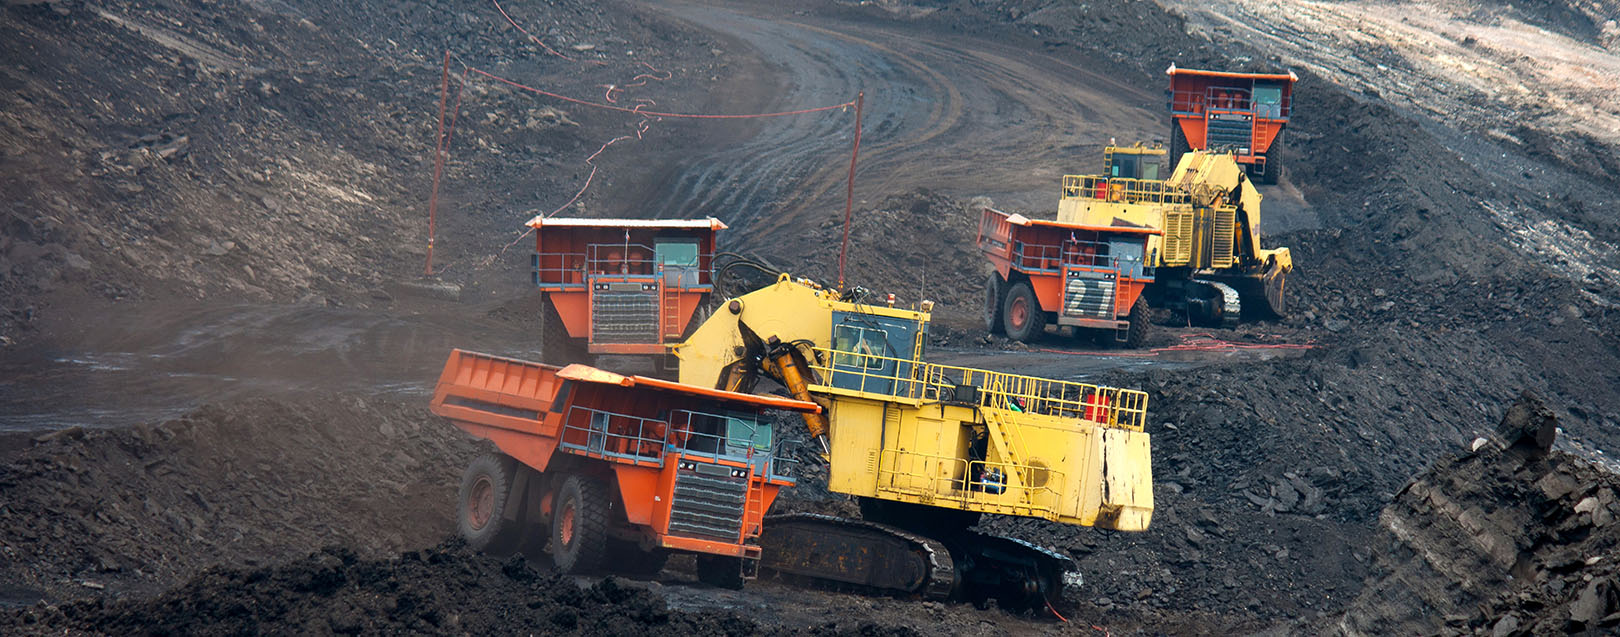 India to see steep growth in coal demand: IEA